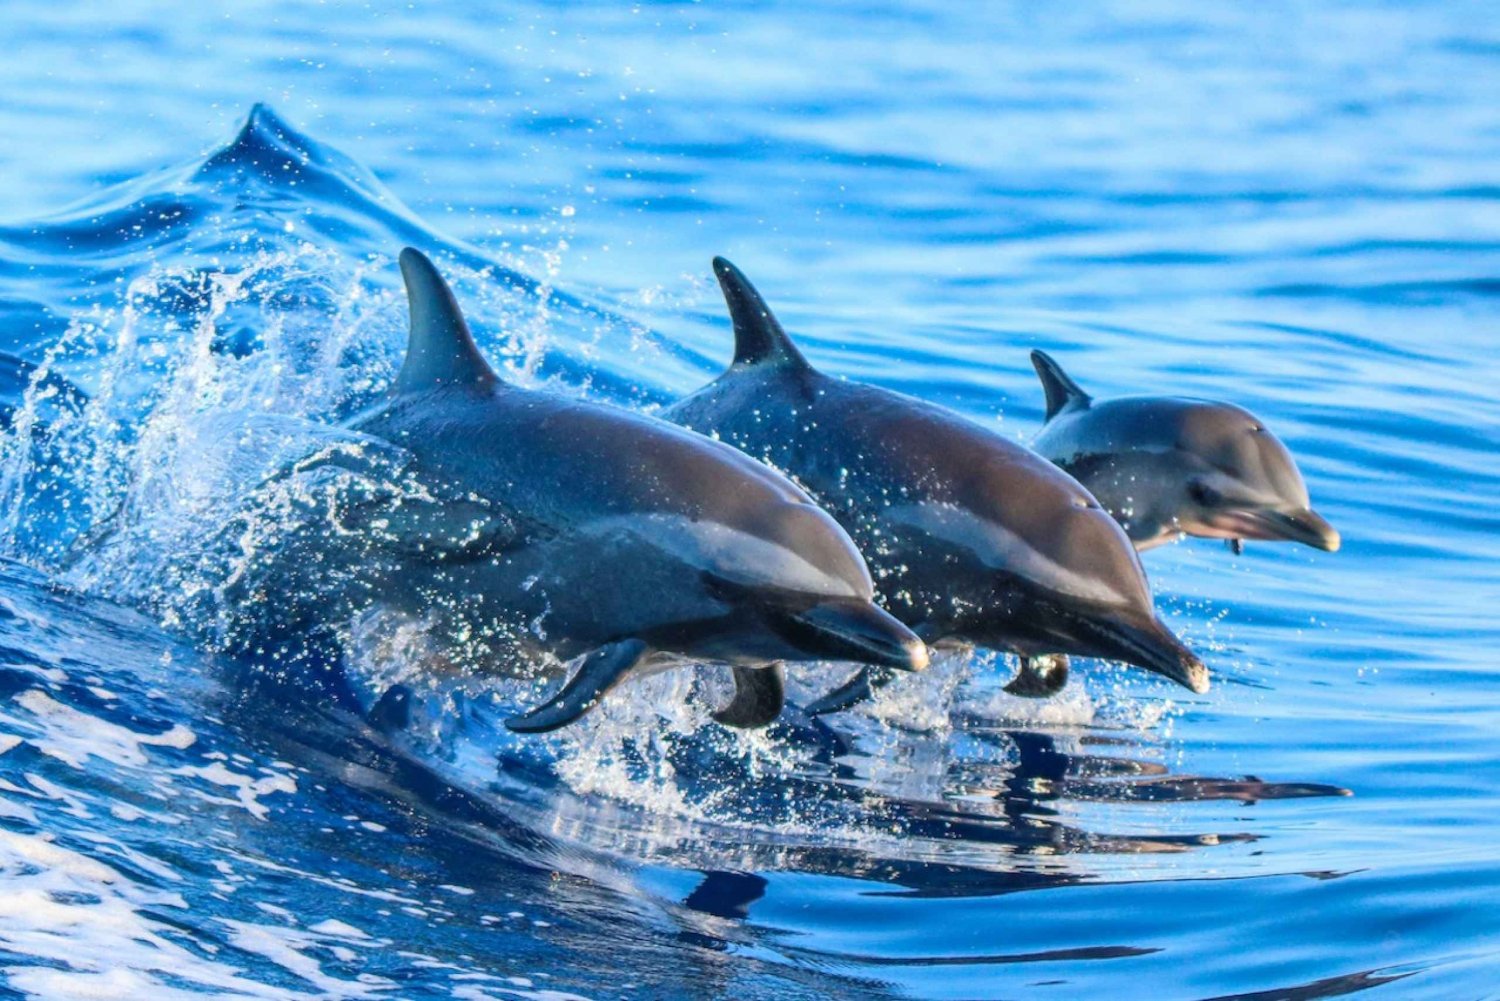 Guidet delfinobservation og snorkling i Costa Rica